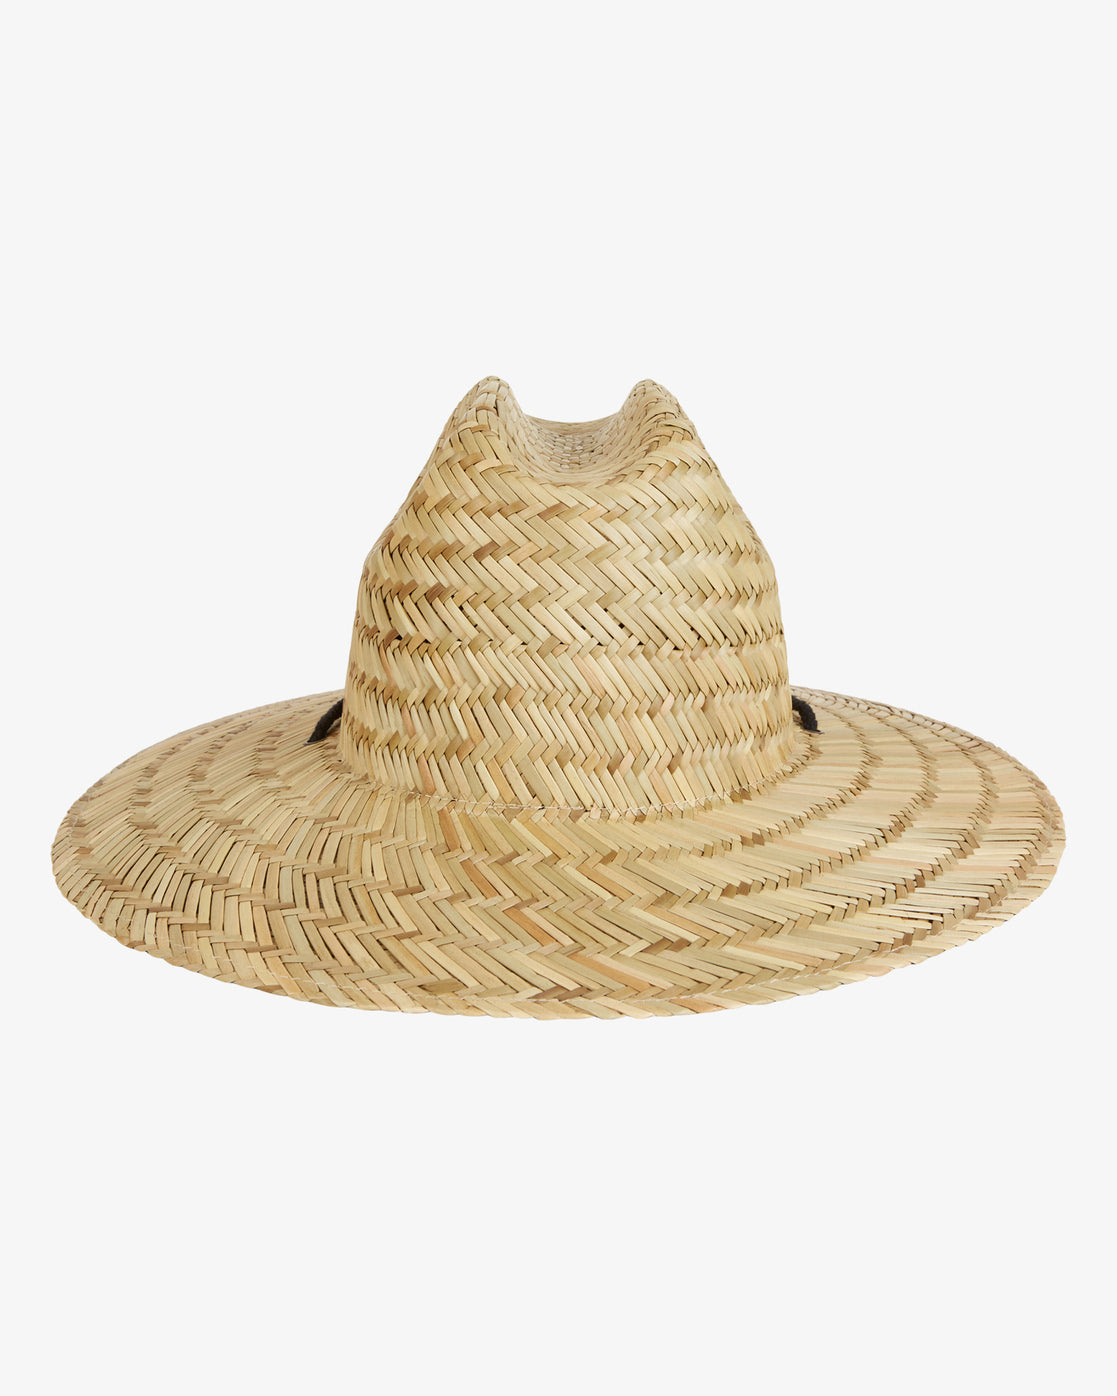 Tides Straw Lifeguard Hat - Natural